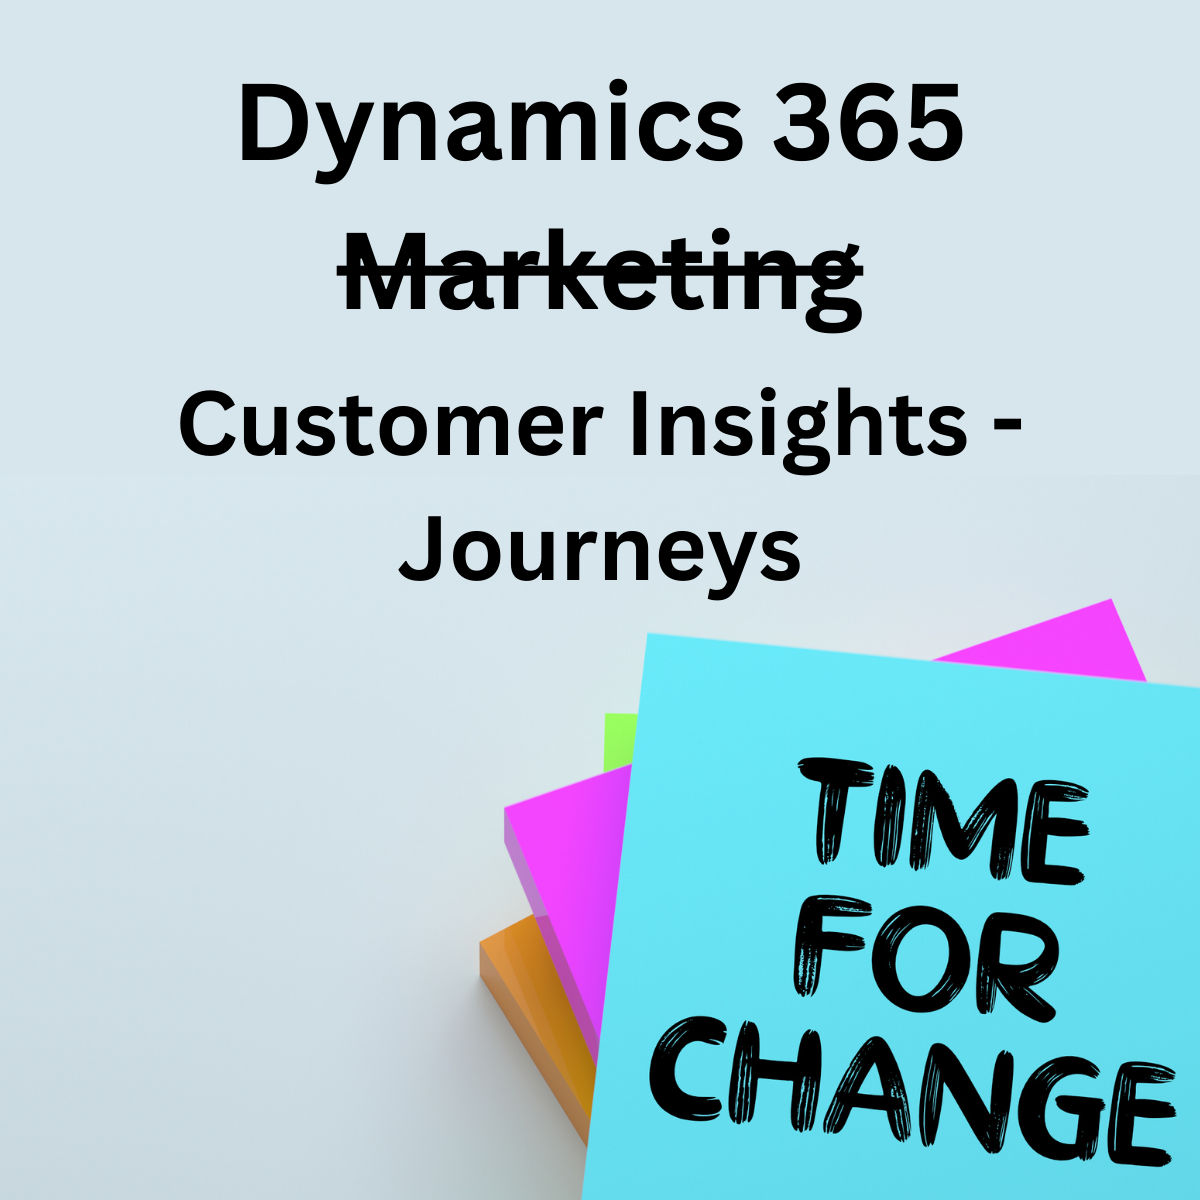 When Dynamics 365 Marketing becomes Dynamics 365 Customer Insights - Journeys